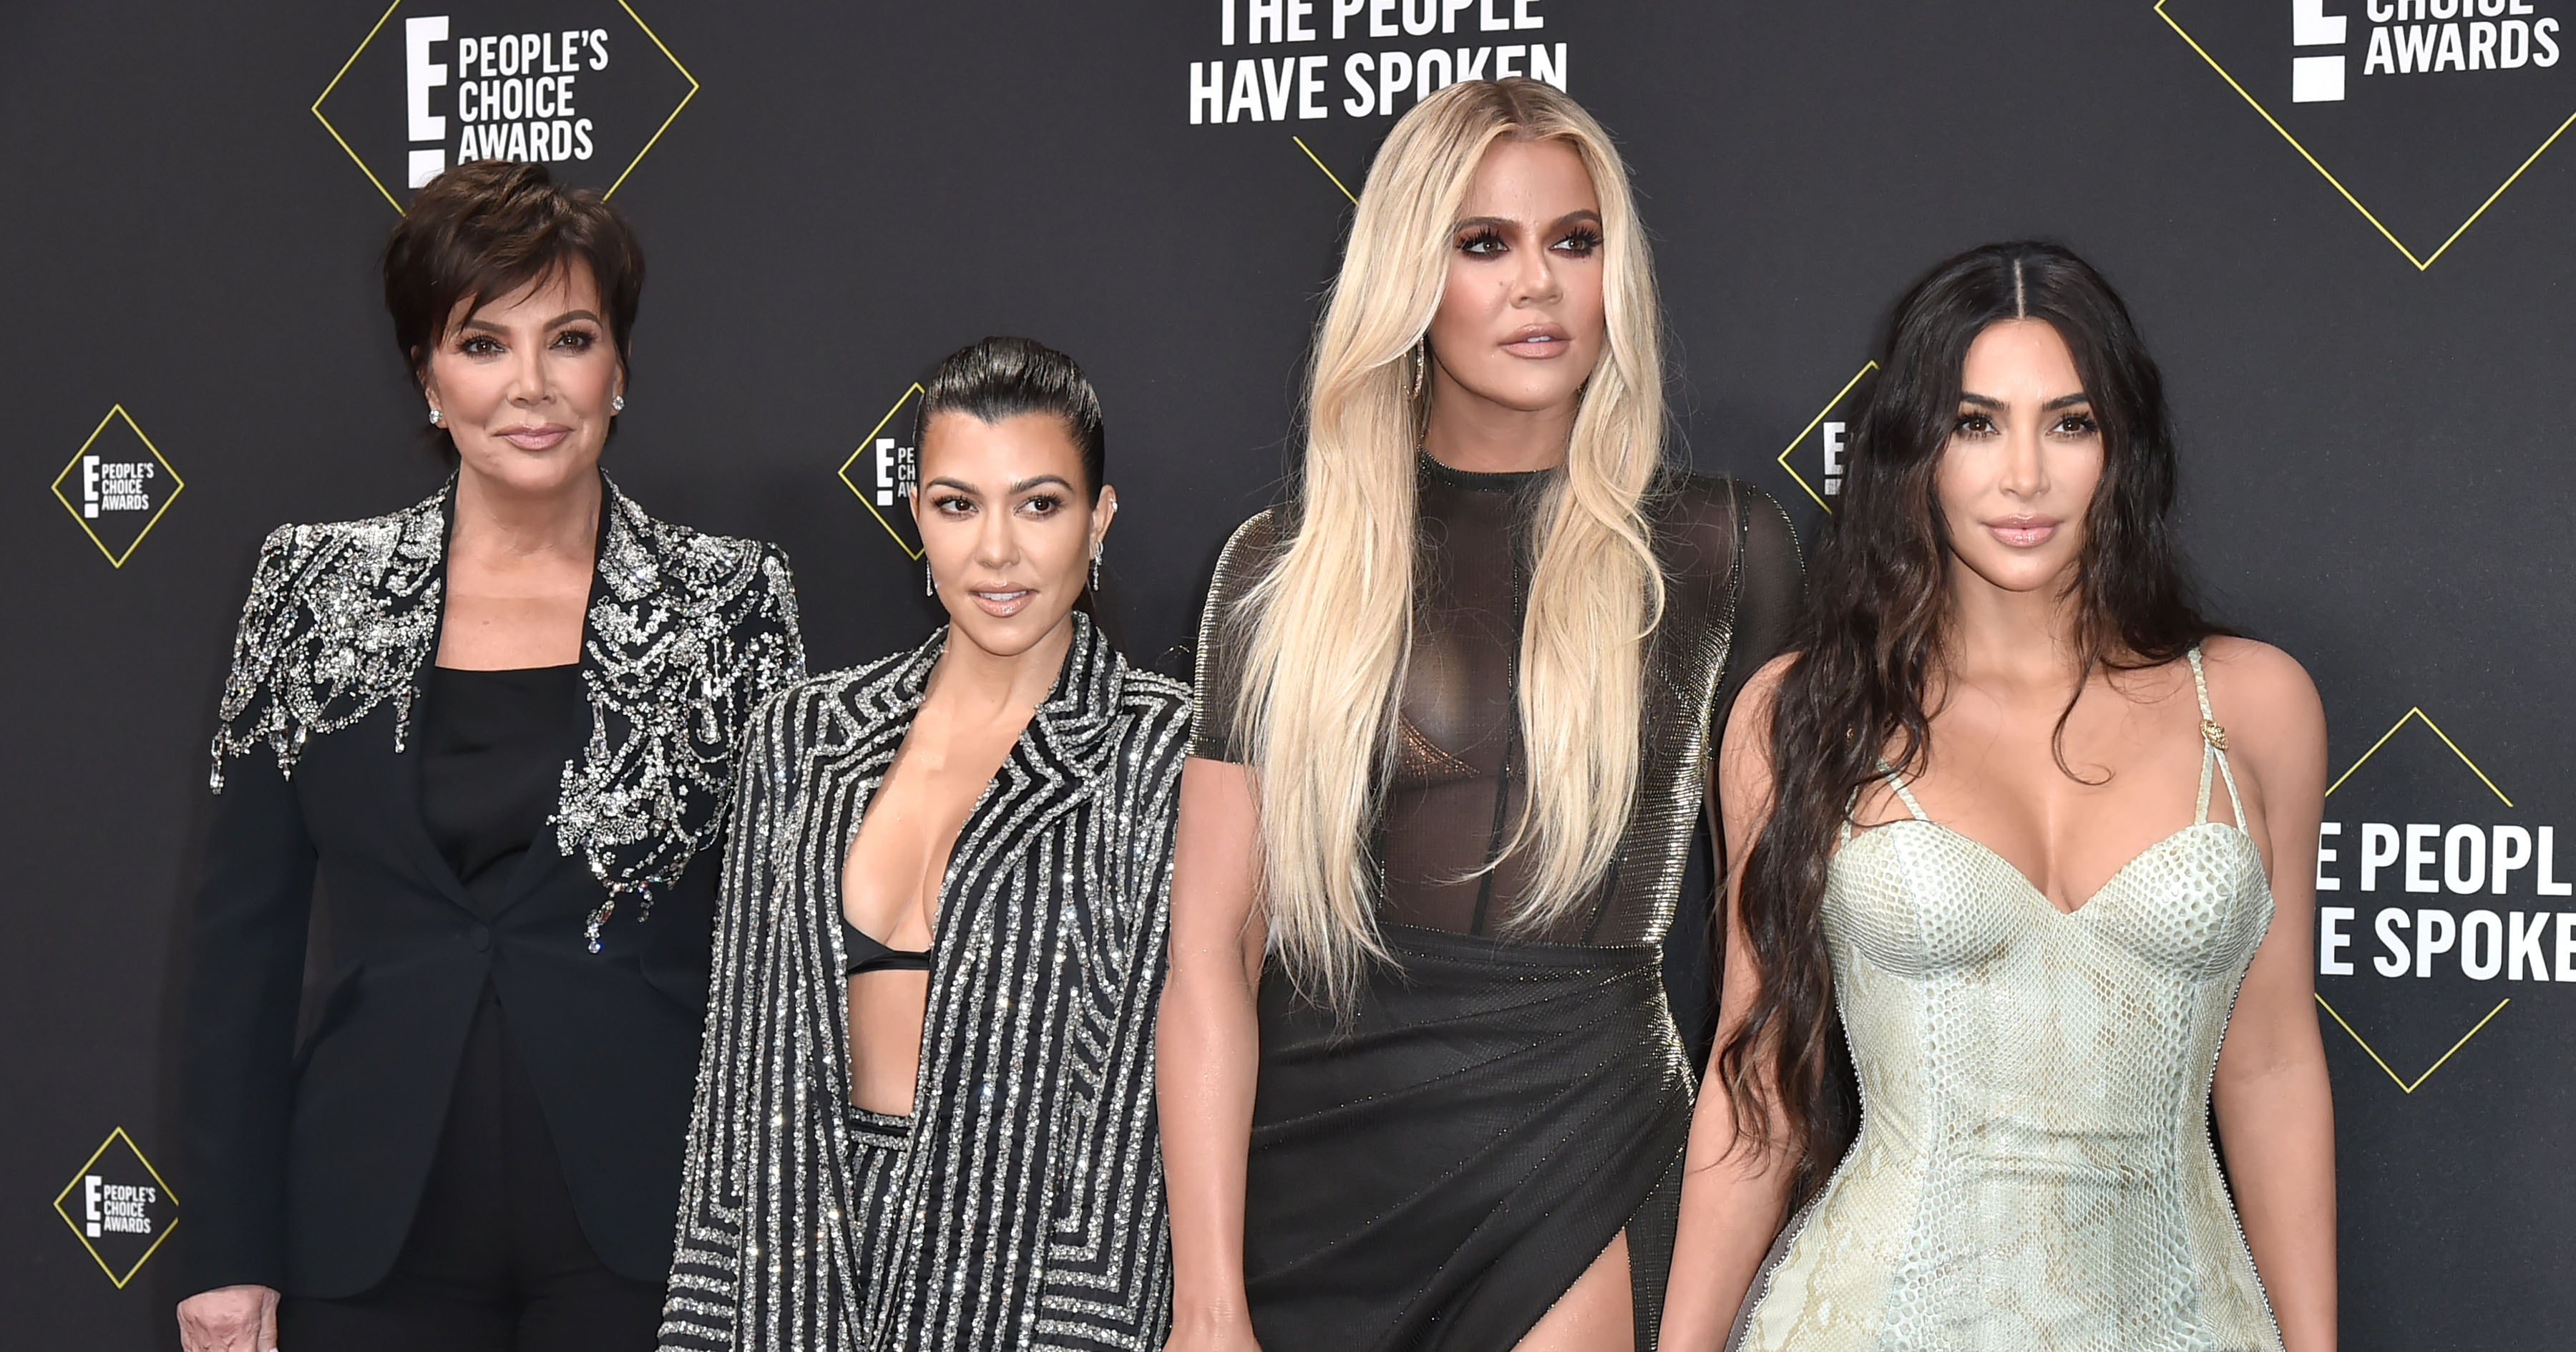 Kim Kardashian wants her kids to run her beauty brand